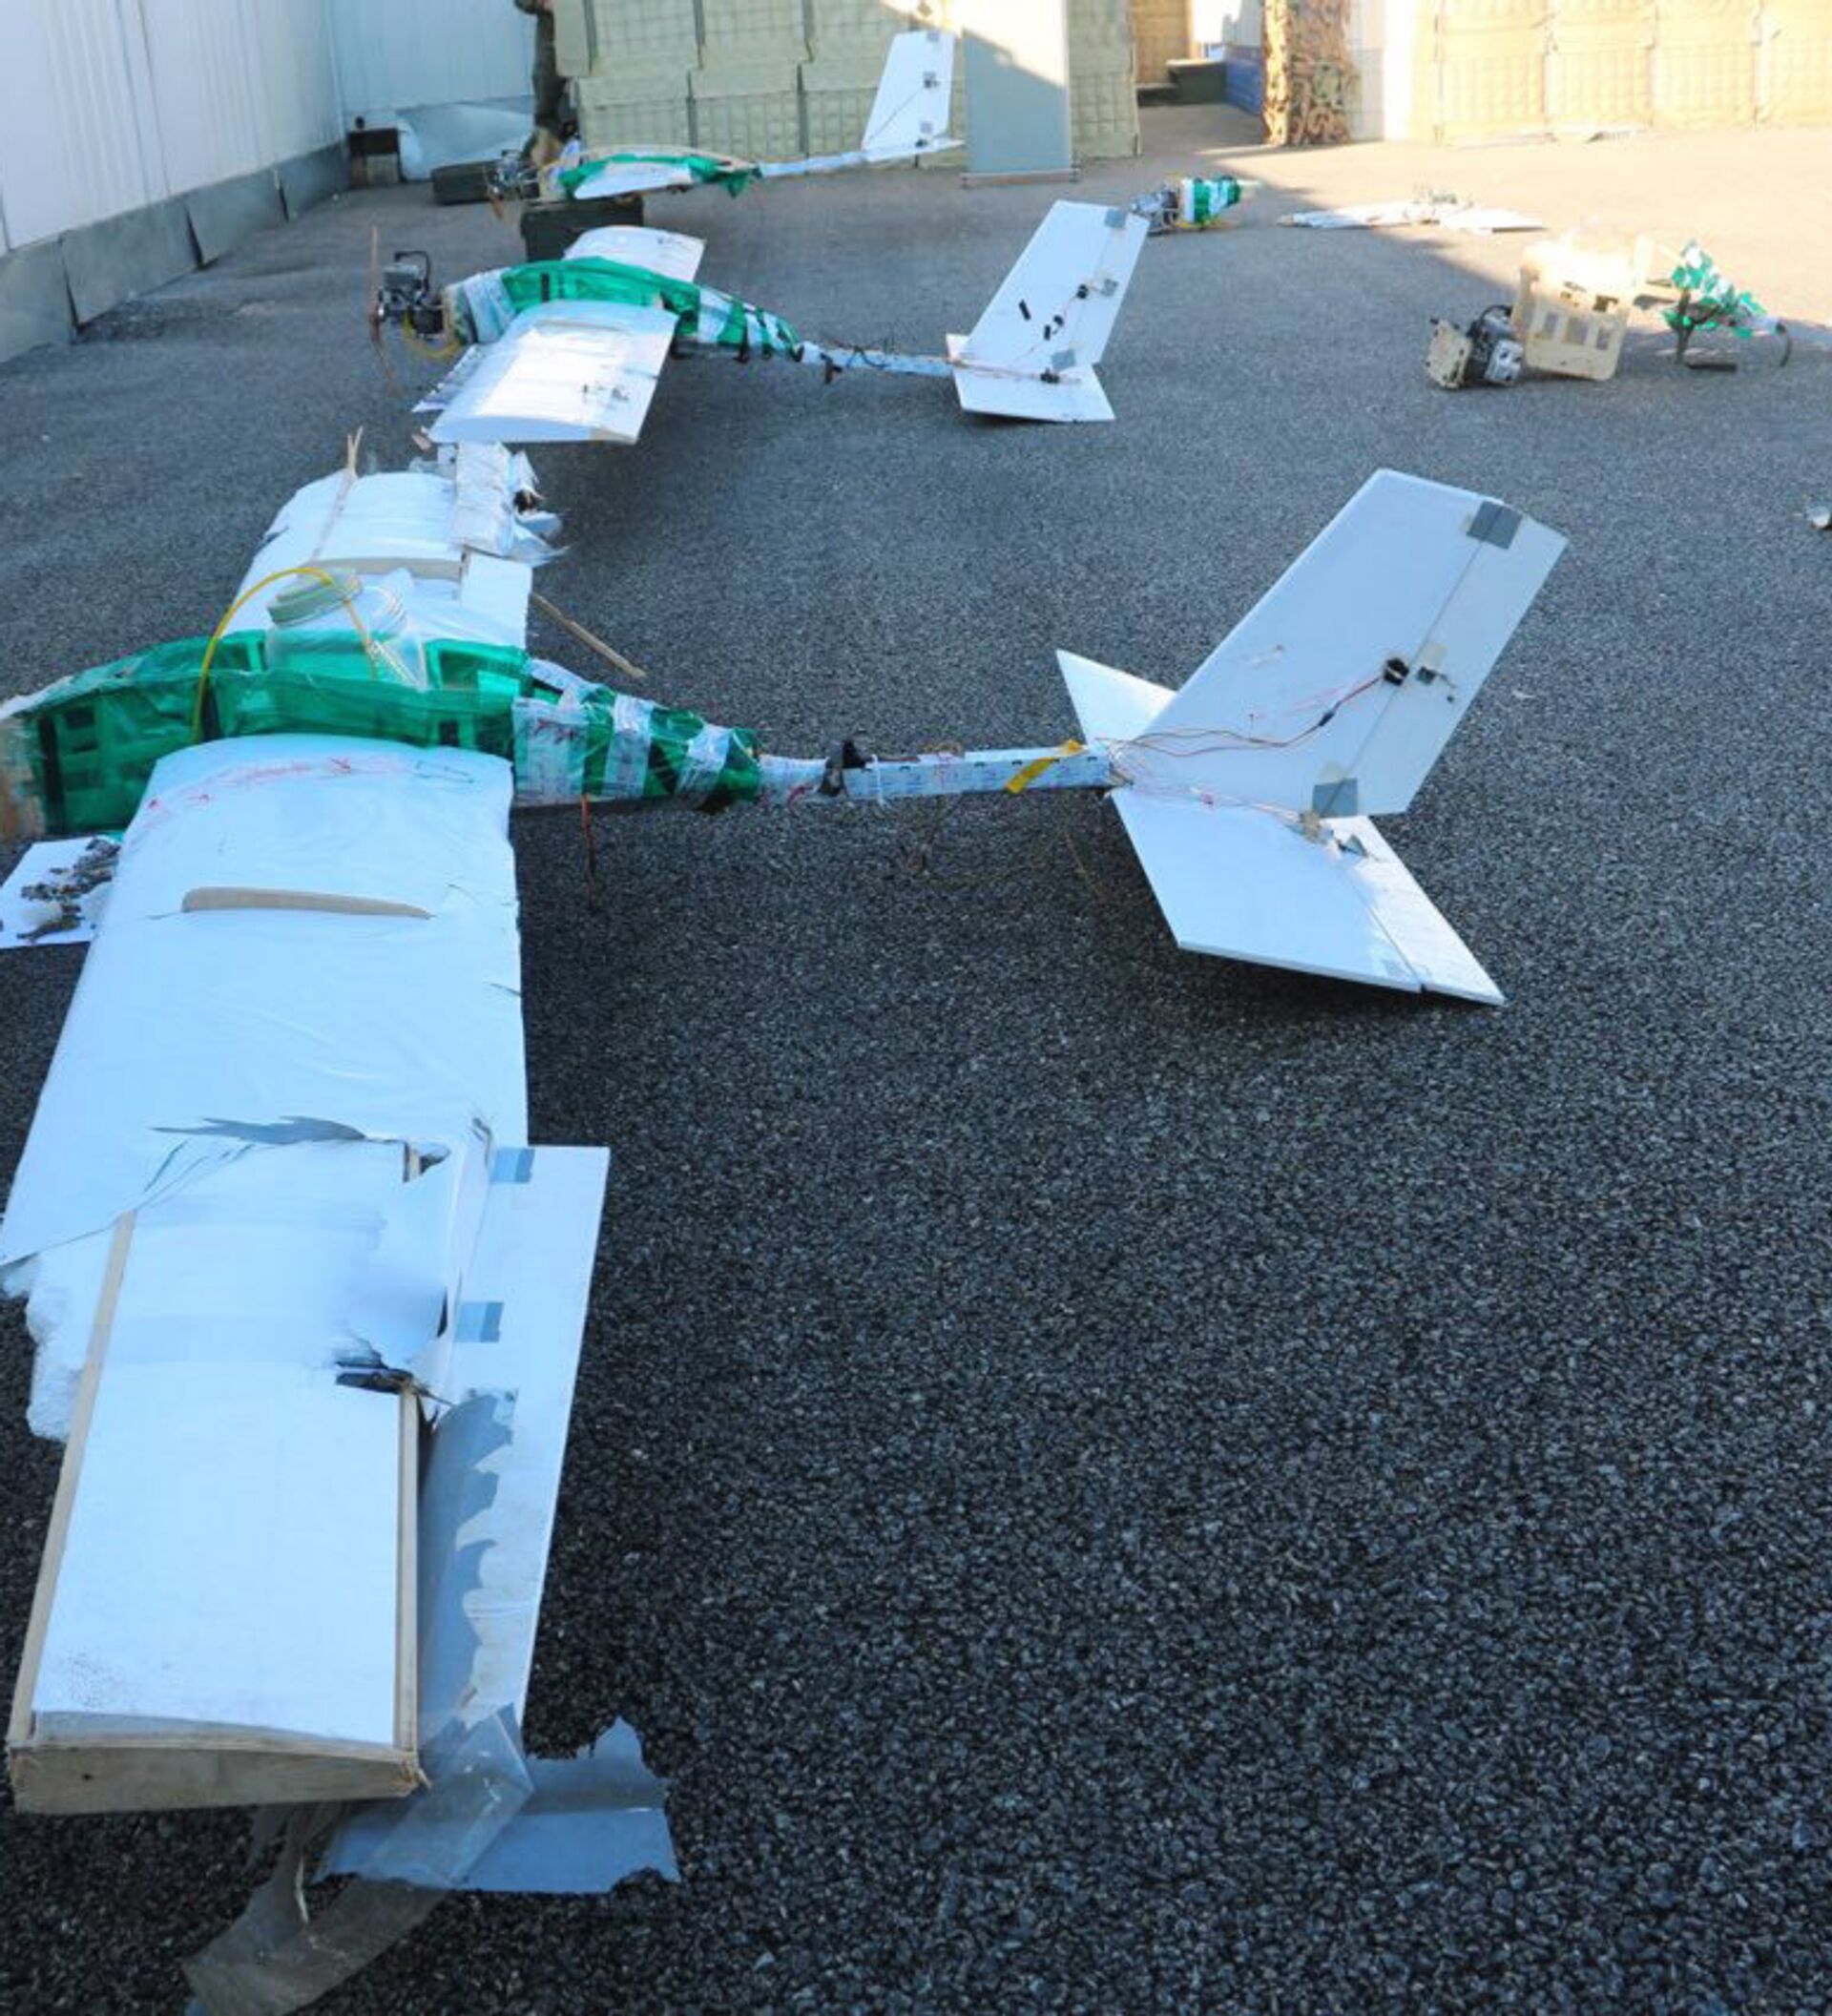 Сколько дронов атаковали. Атака дронов на Хмеймим. Беспилотники атака базы в Сирии. Атака дронов на российскую базу в Сирии. Беспилотники ИГИЛ В Сирии.